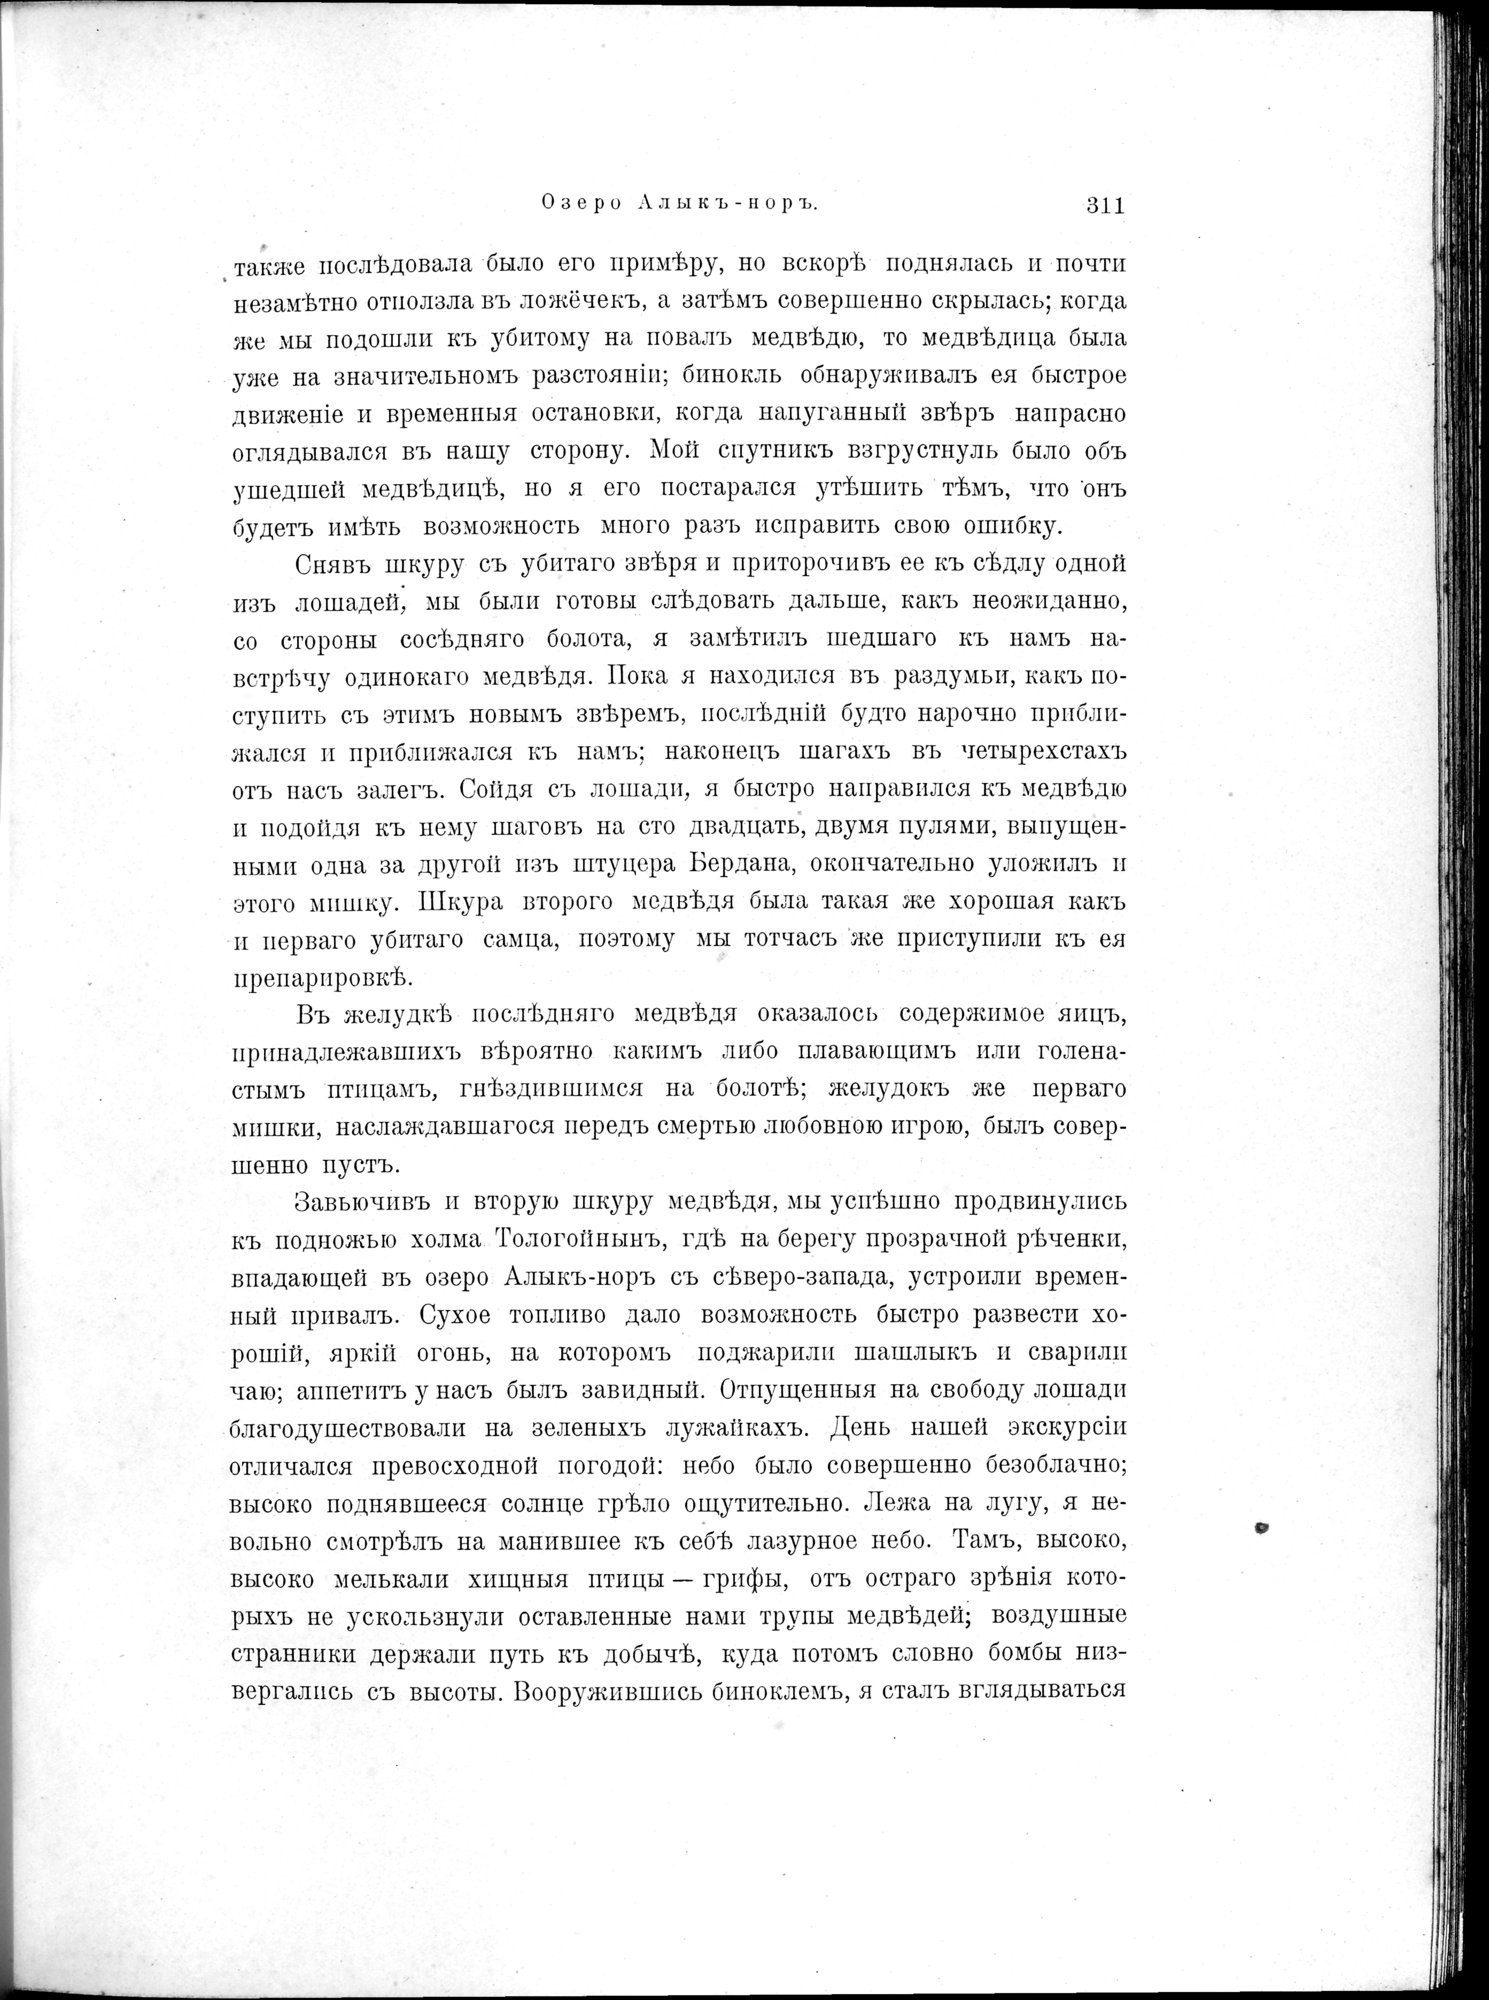 Mongoliia i Kam : vol.2 / Page 79 (Grayscale High Resolution Image)